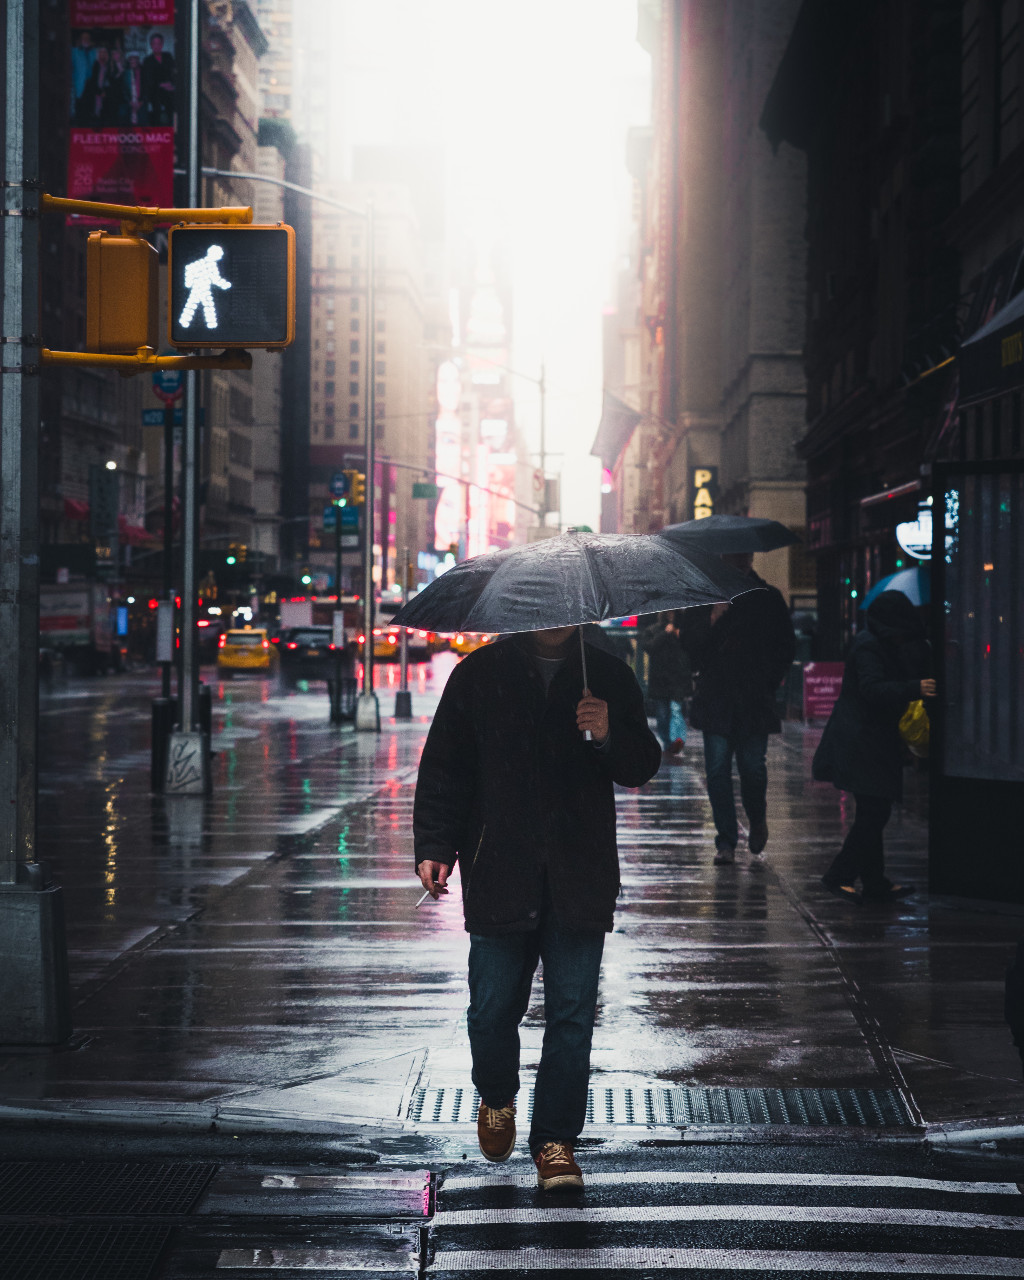 Mensch mit Regenschirm